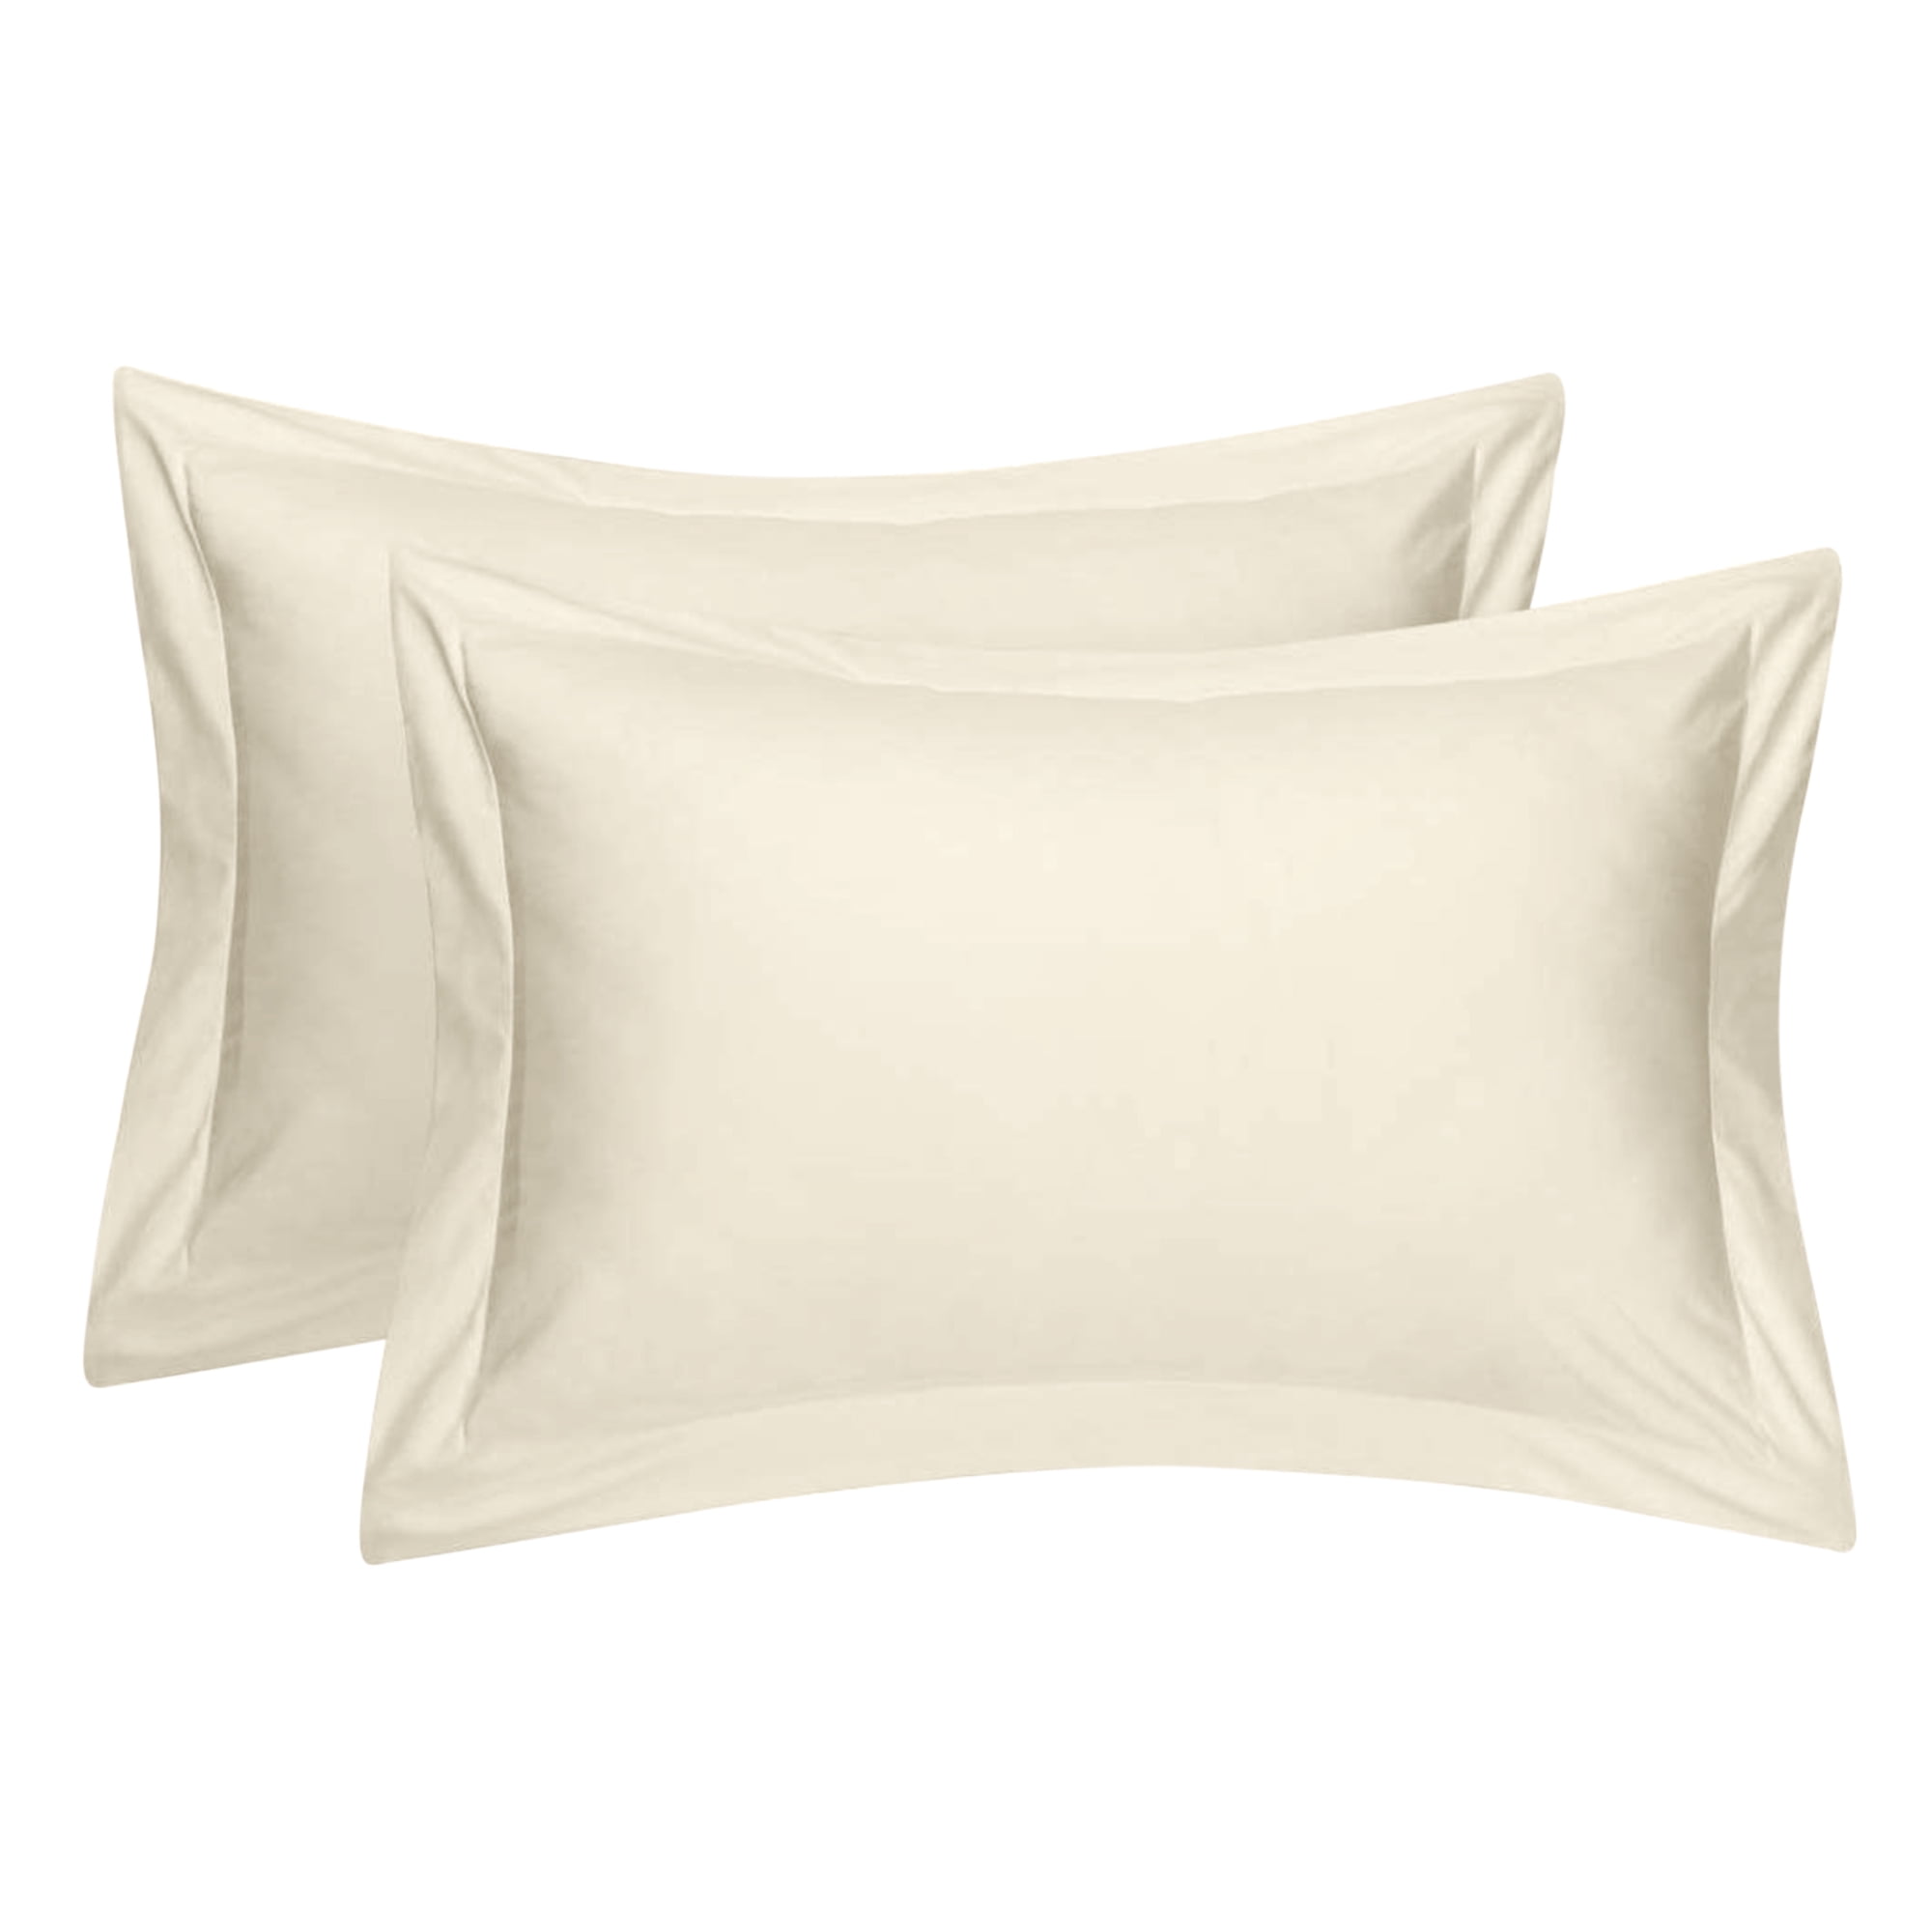 Cotton Metrics Heavy Quality King Pillow Shams Set of 2 White